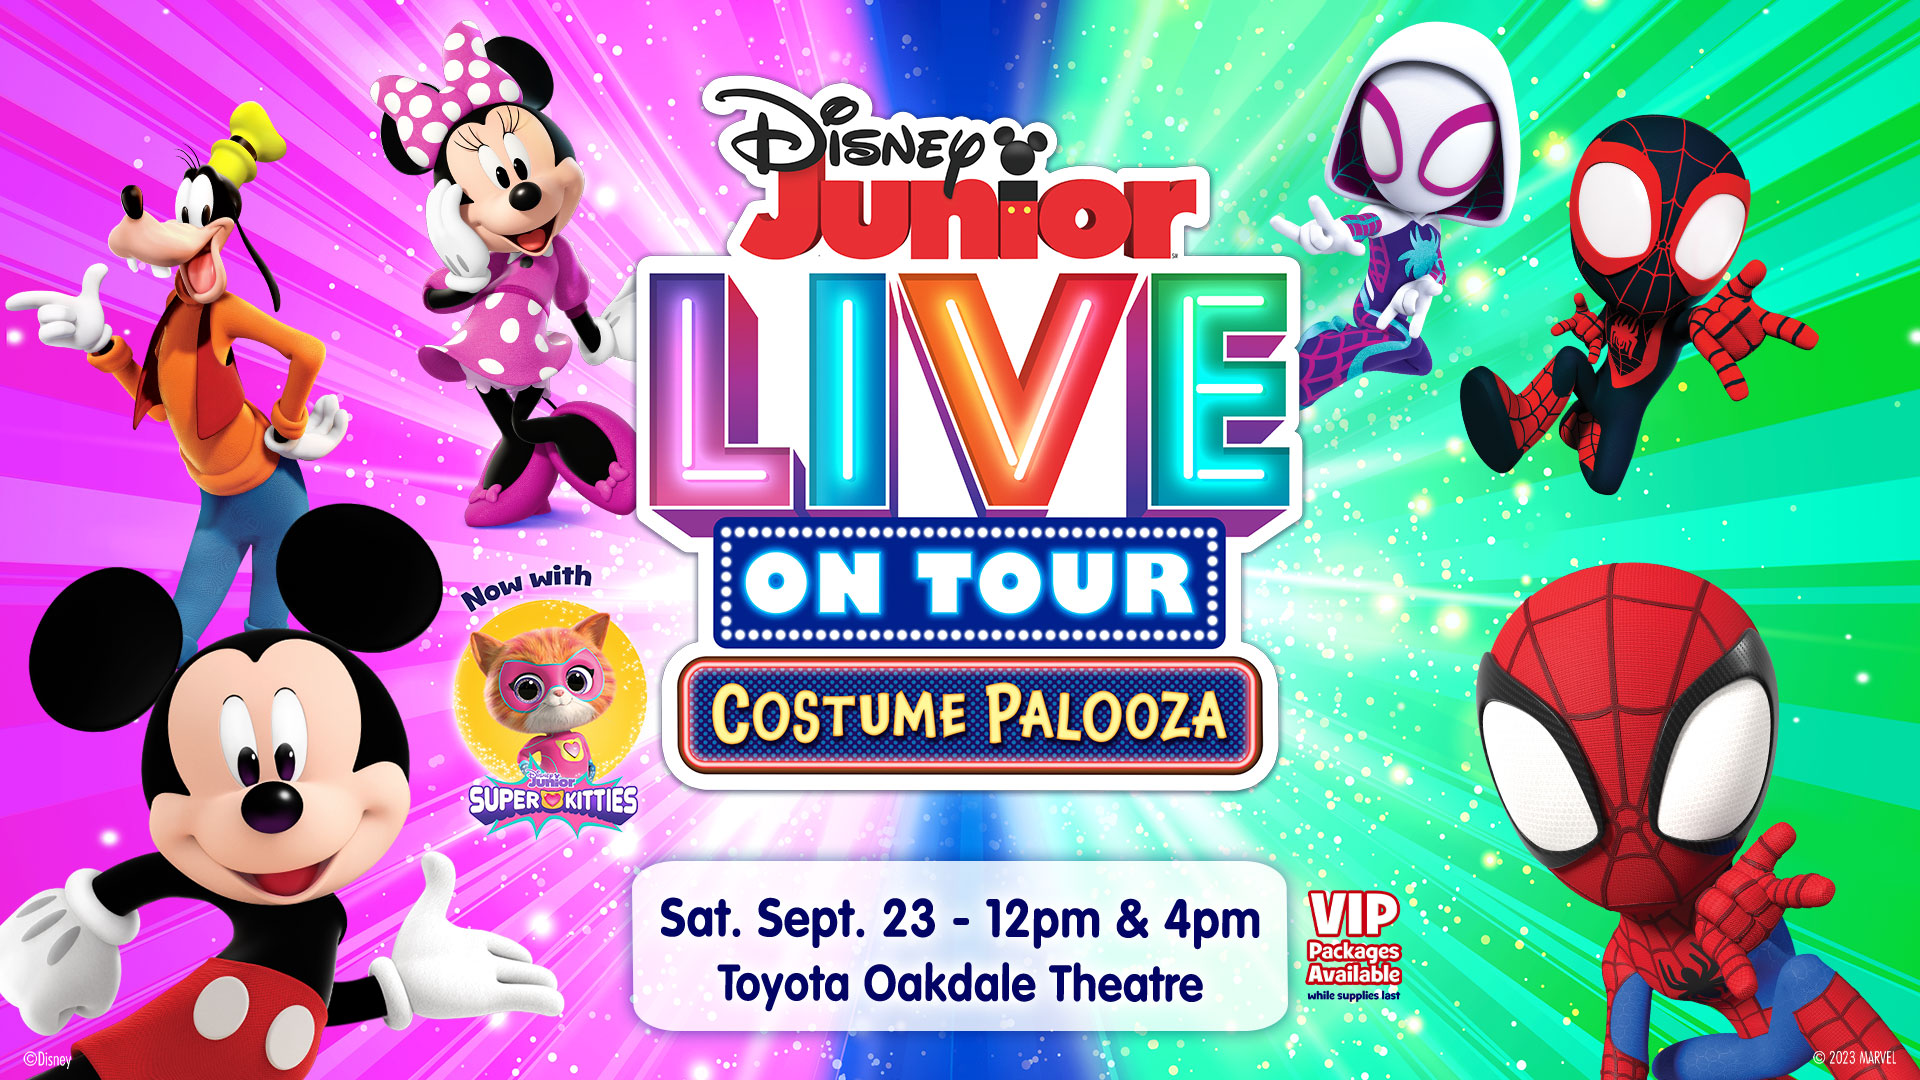 Disney Junior Live Costume Palooza